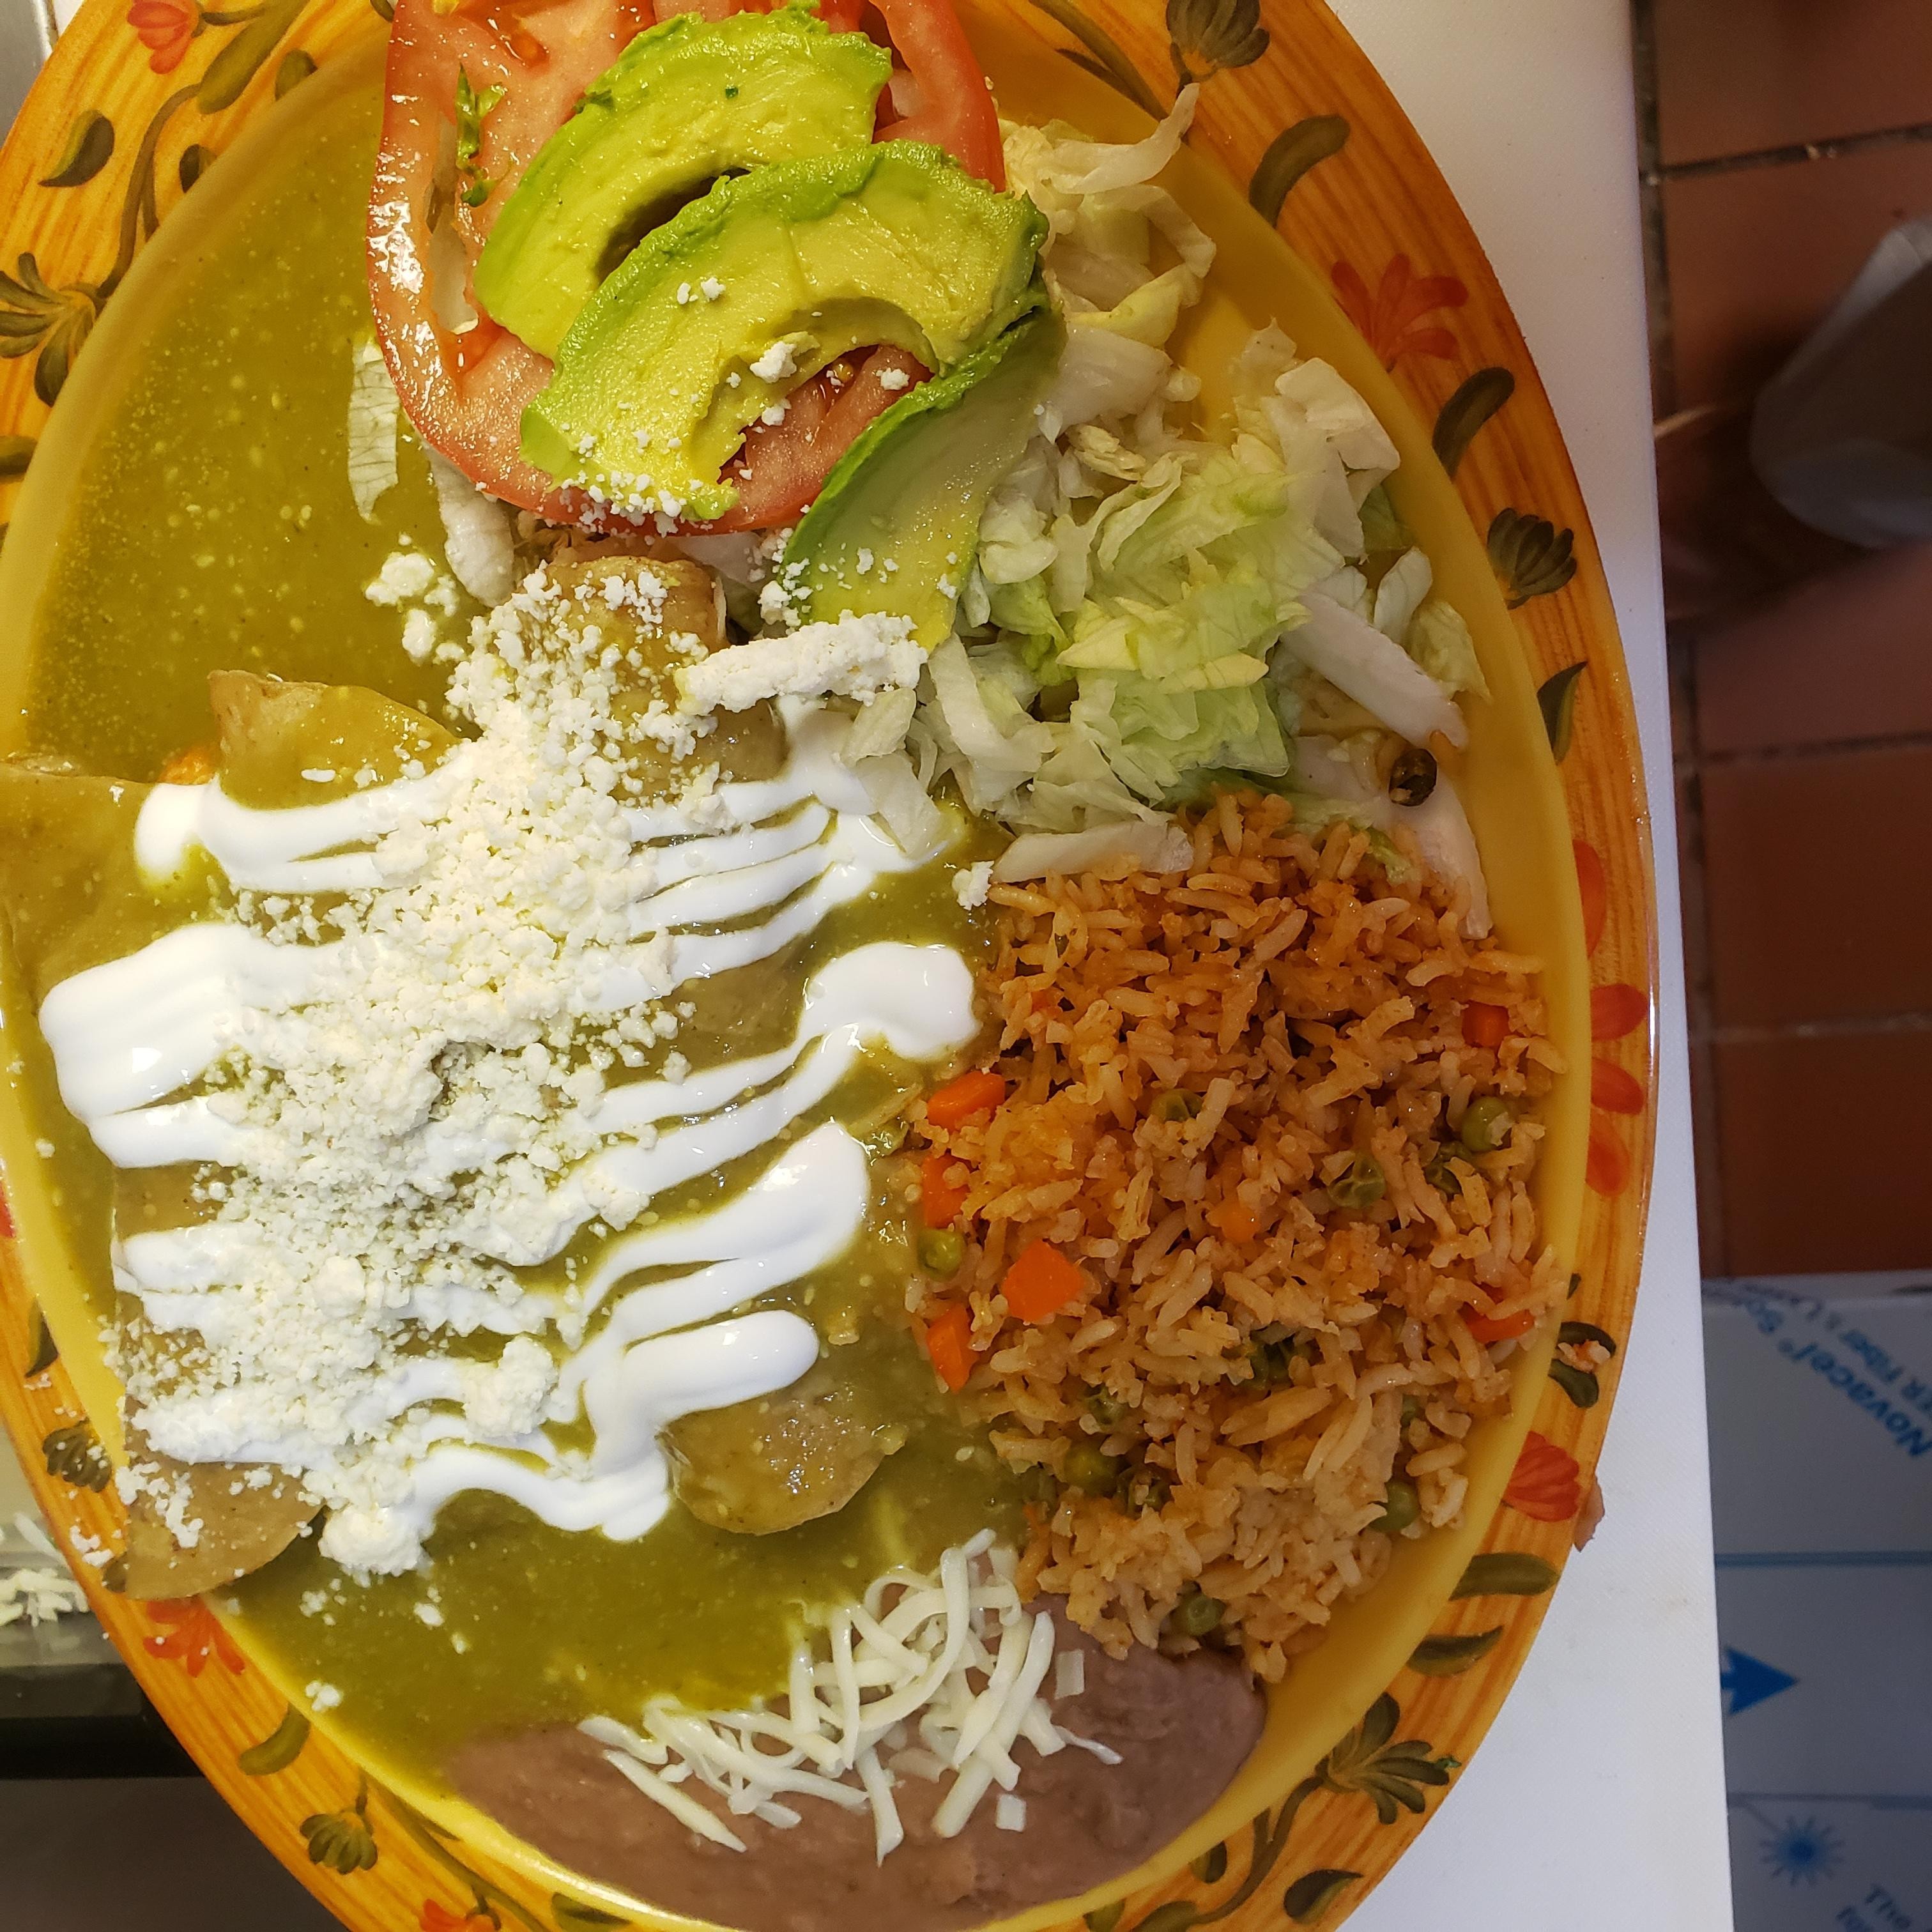 Green Enchiladas